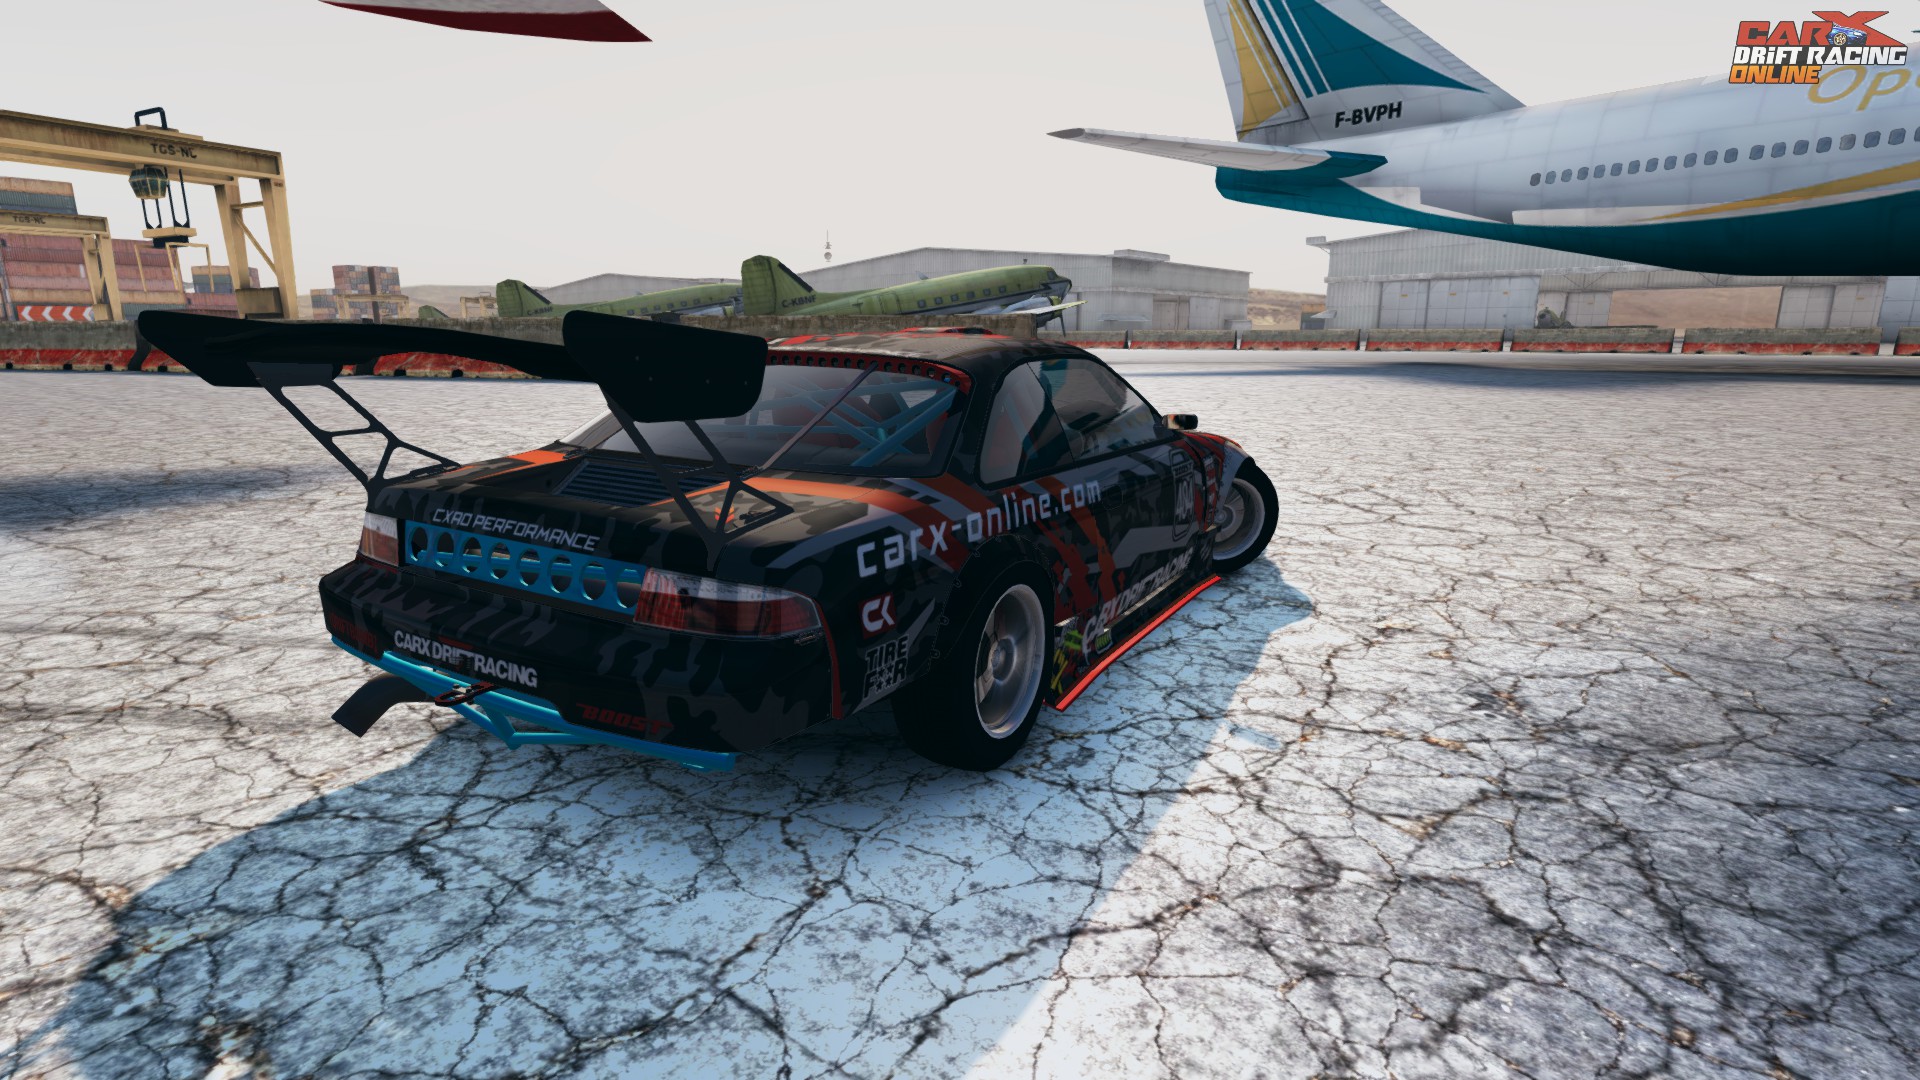 CarX Drift Racing 2 na App Store